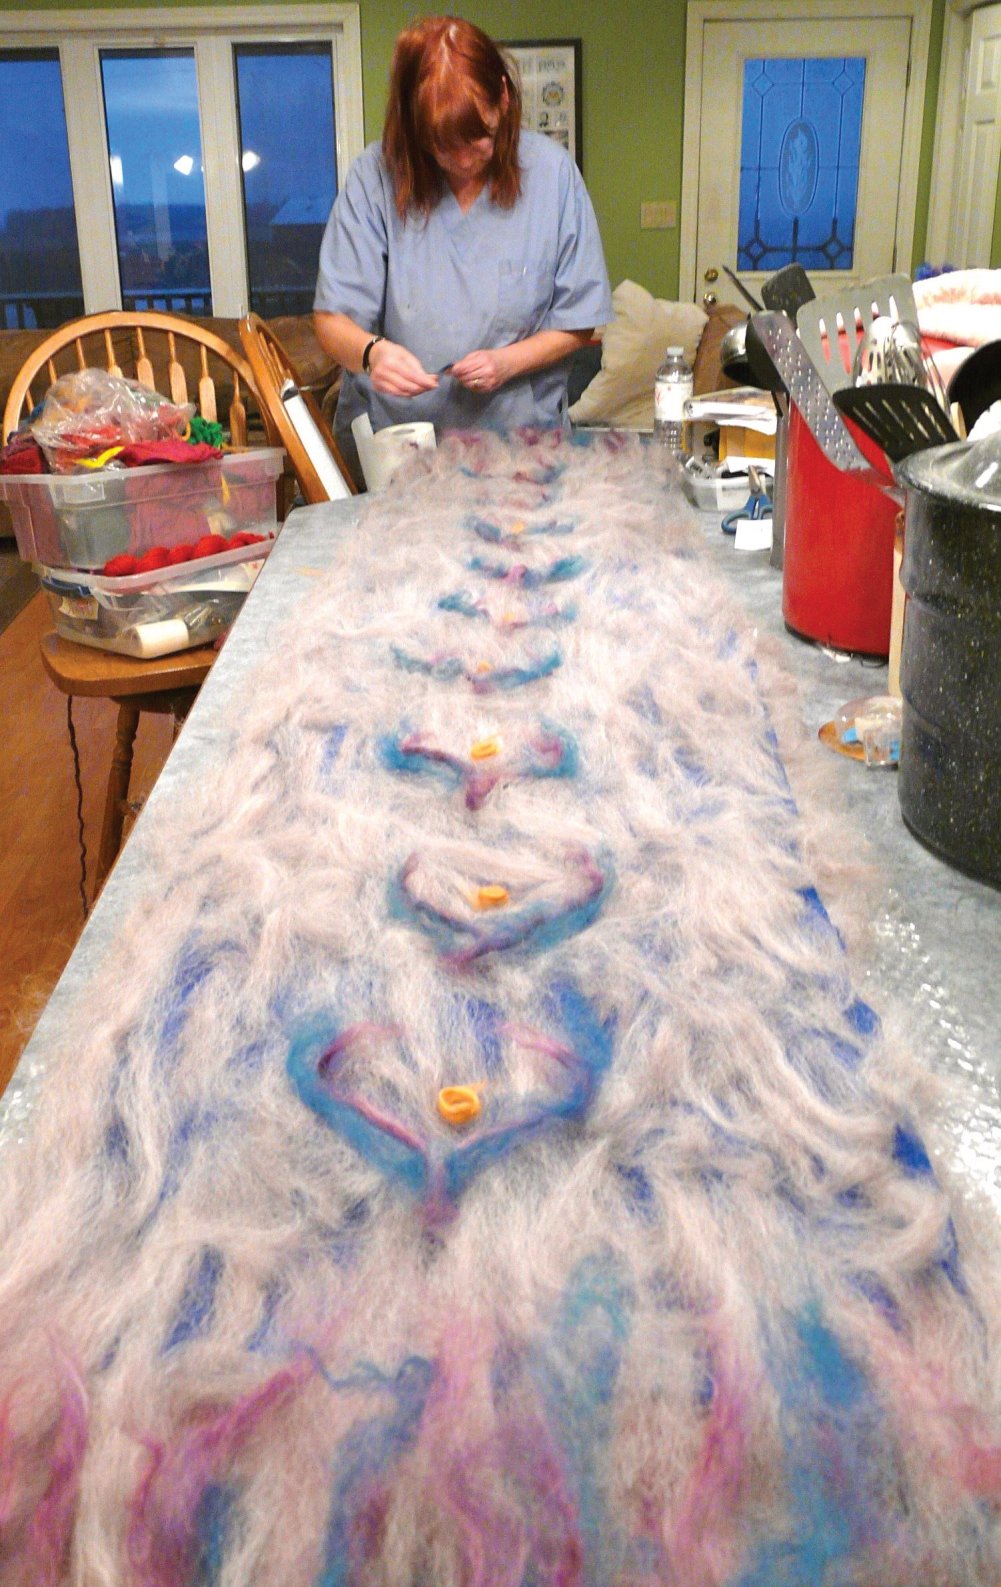 Working on the Nuno silk scarf - placing the alpaca fibre